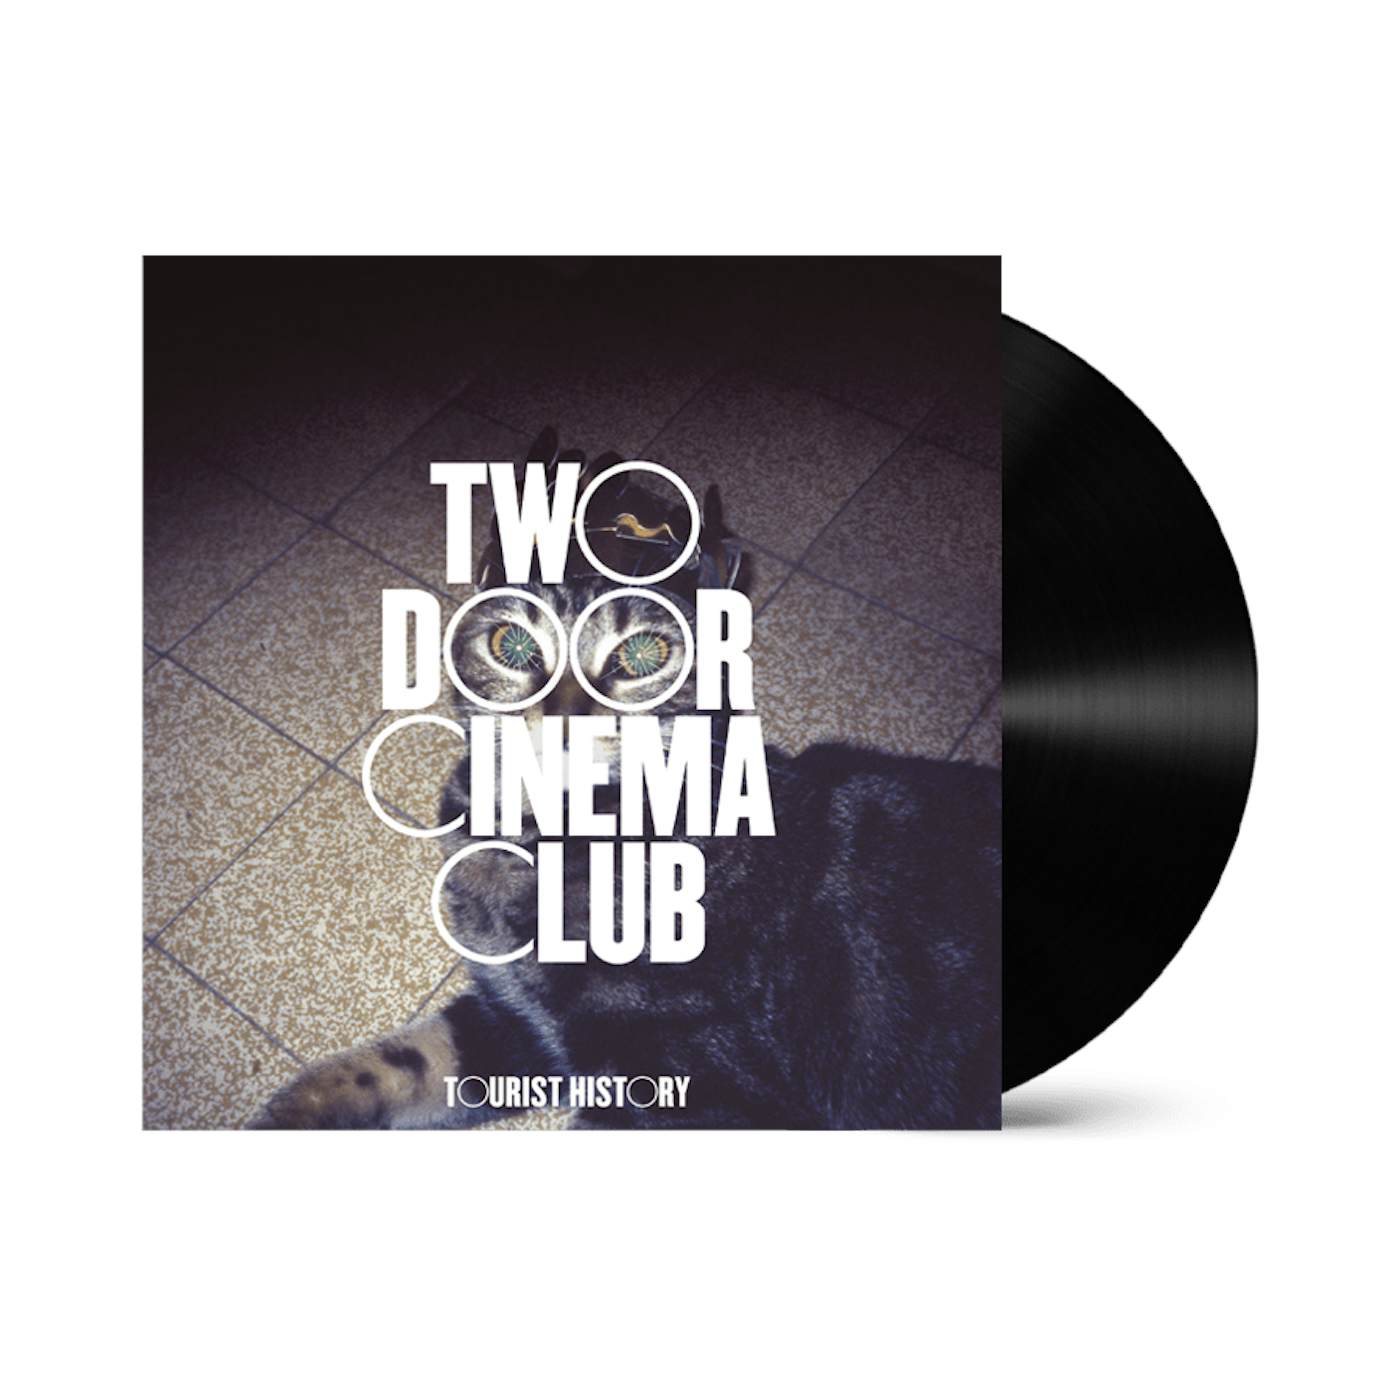 Two Door Cinema Club Tourist History (Remastered) LP (Vinyl)